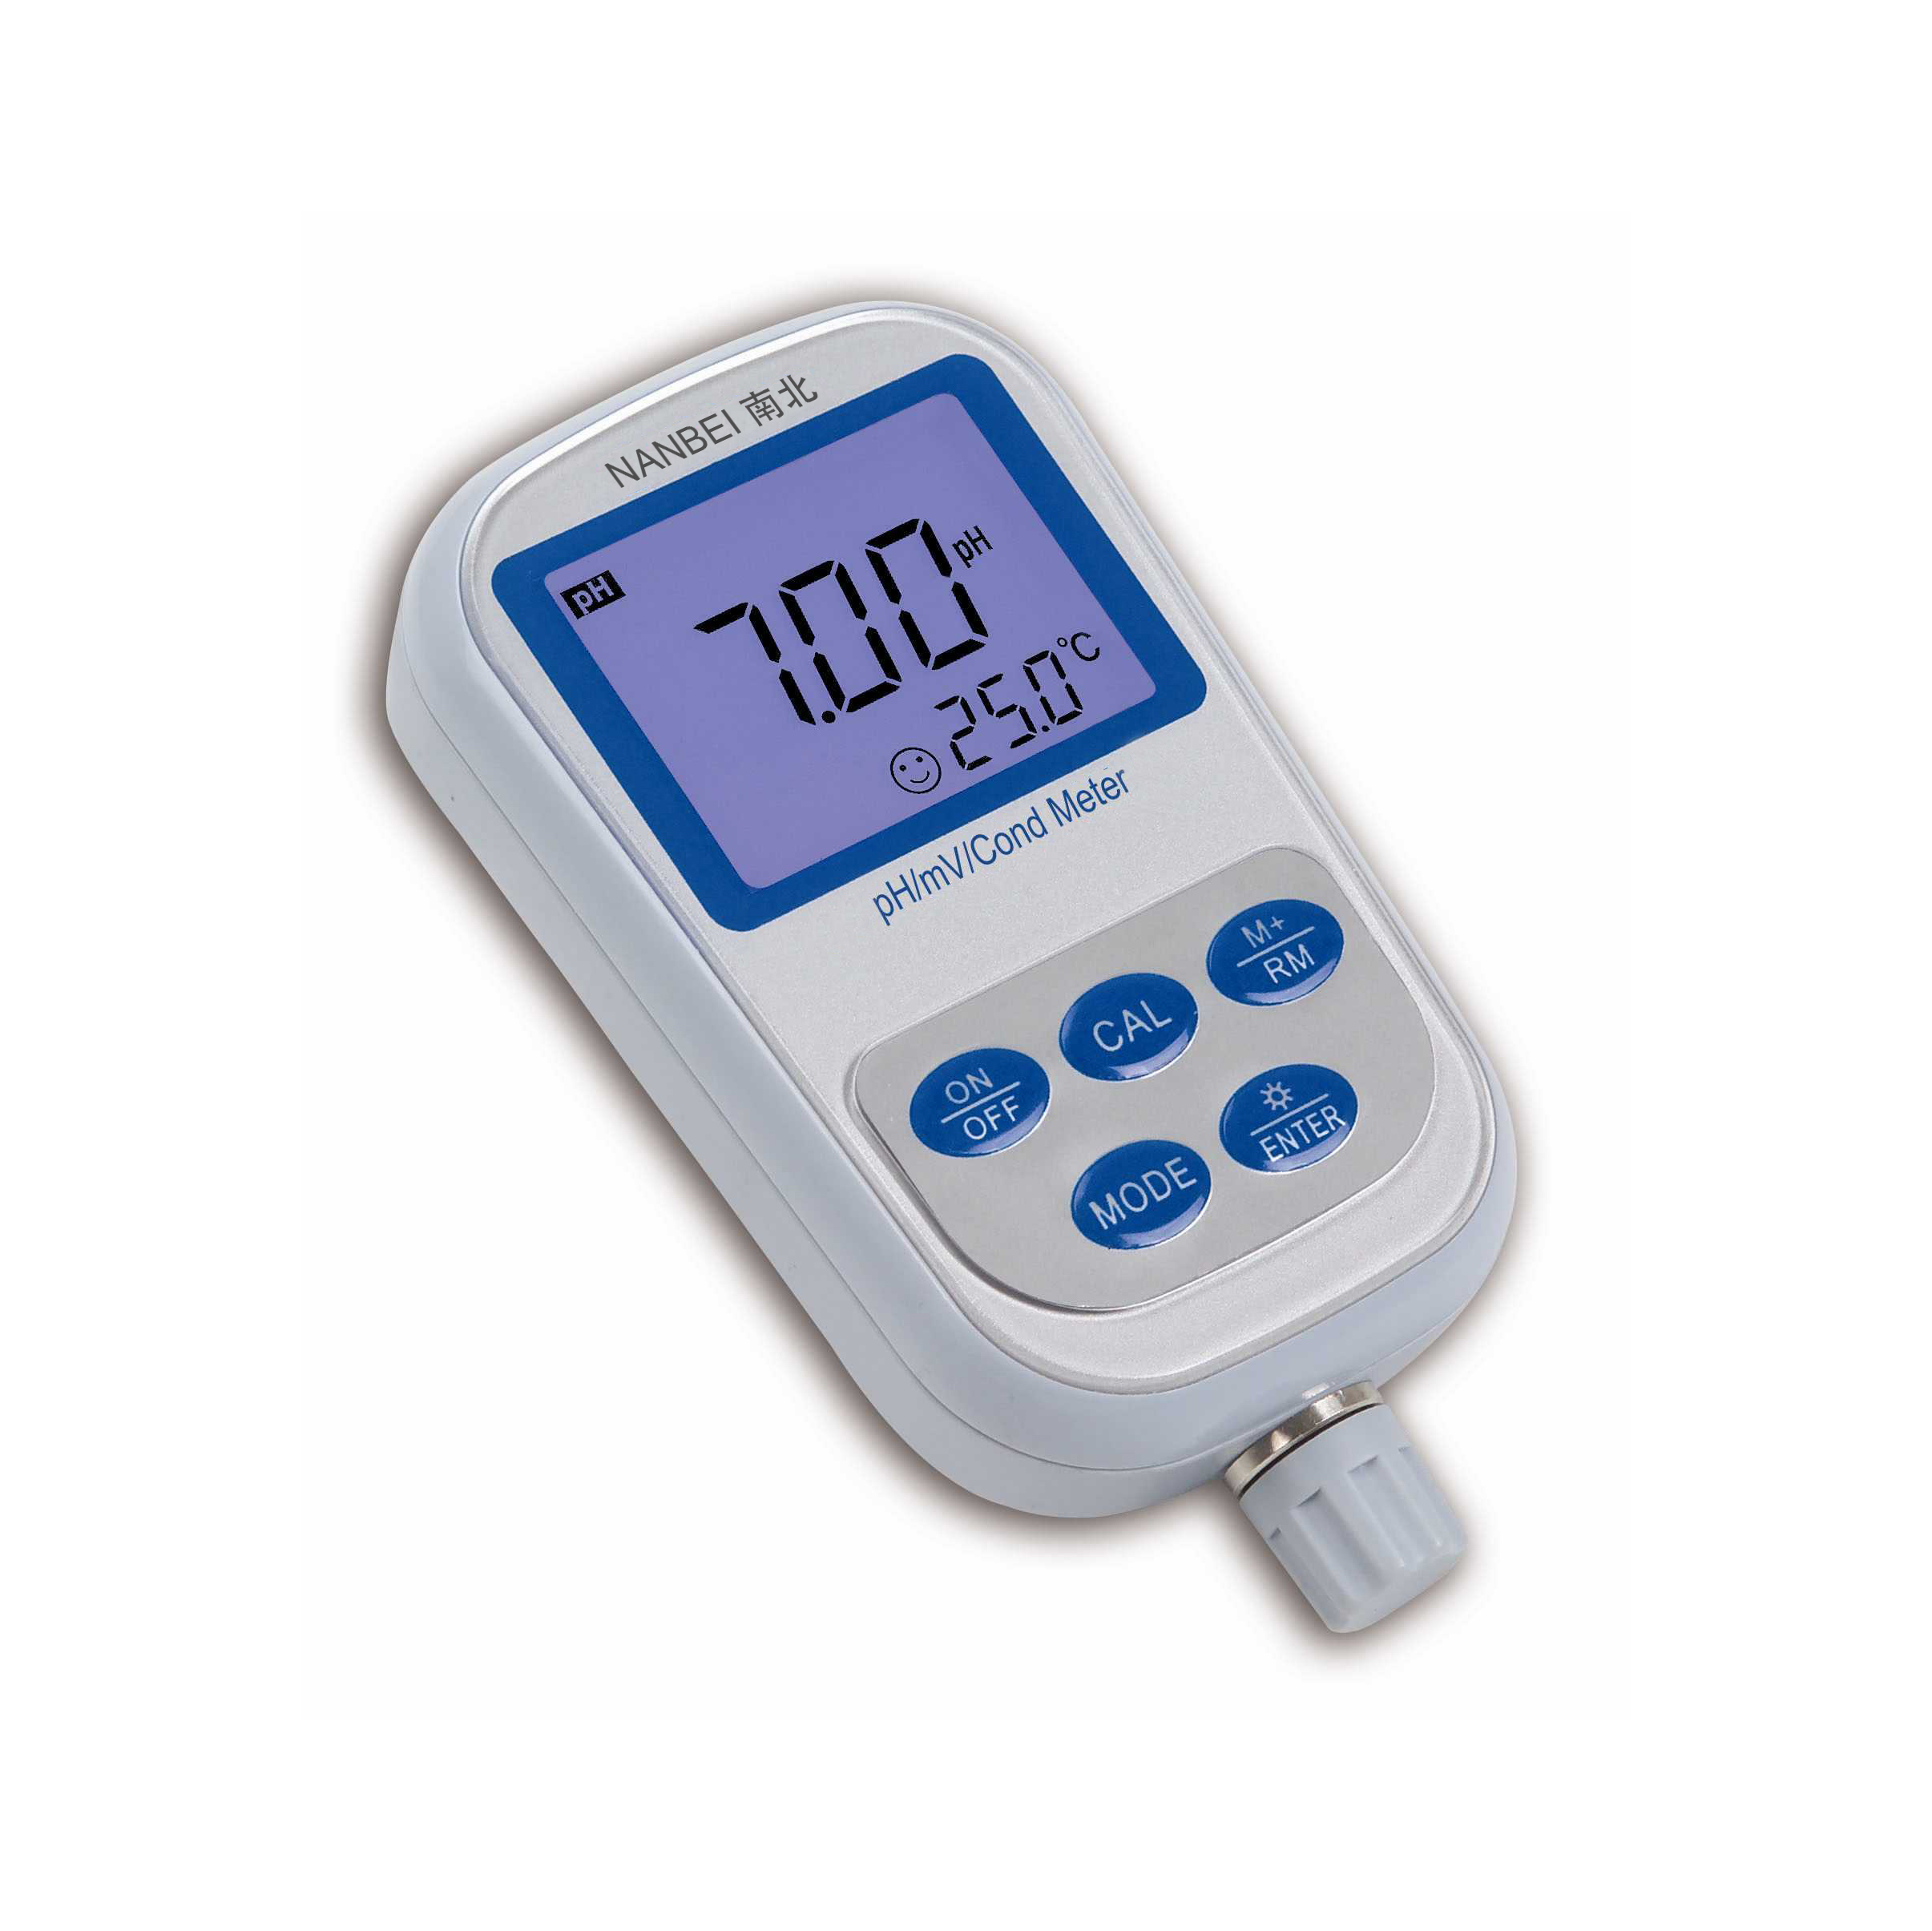 SX751 Portable pH/ORP/Conductivity/DO Meter